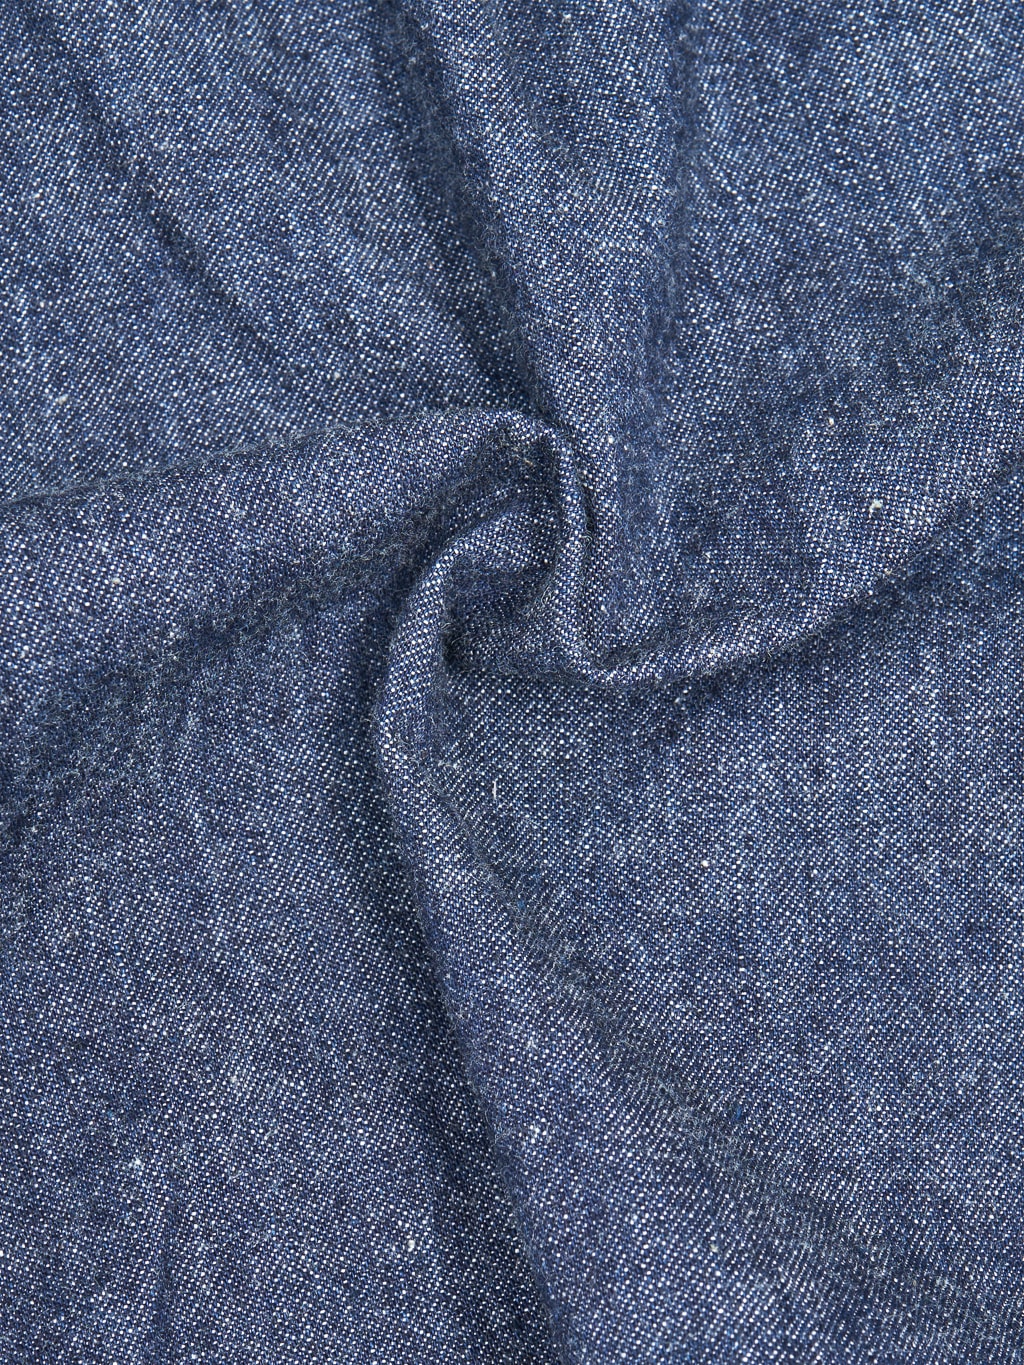 TCB Good Luck indigo denim jacket cotton fabric texture